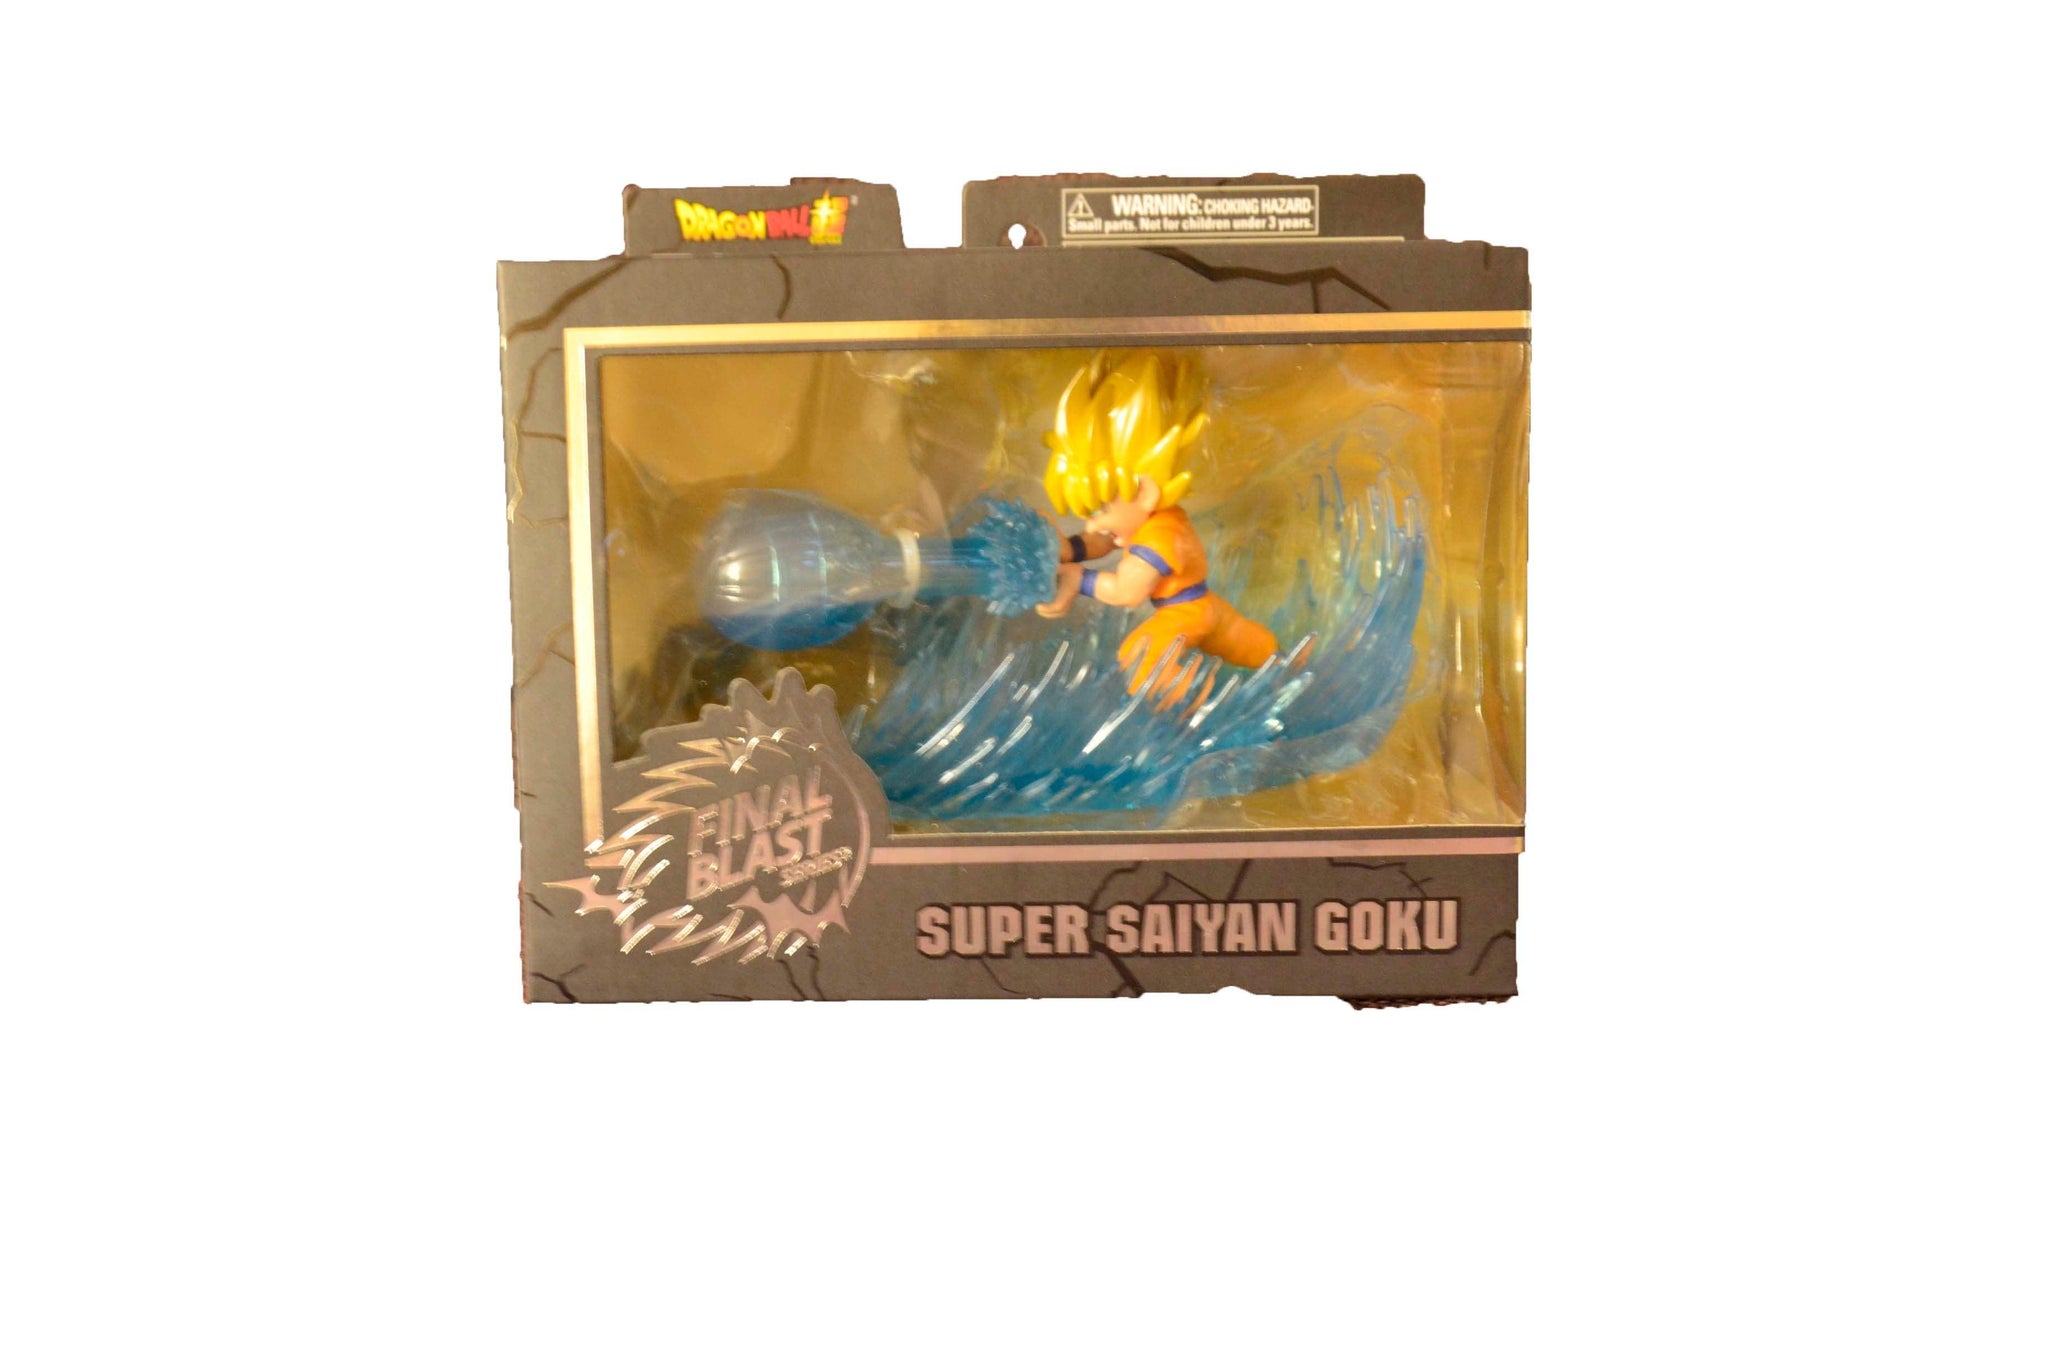 Dragon Ball Super - Final Blast Series Super Saiyan Goku